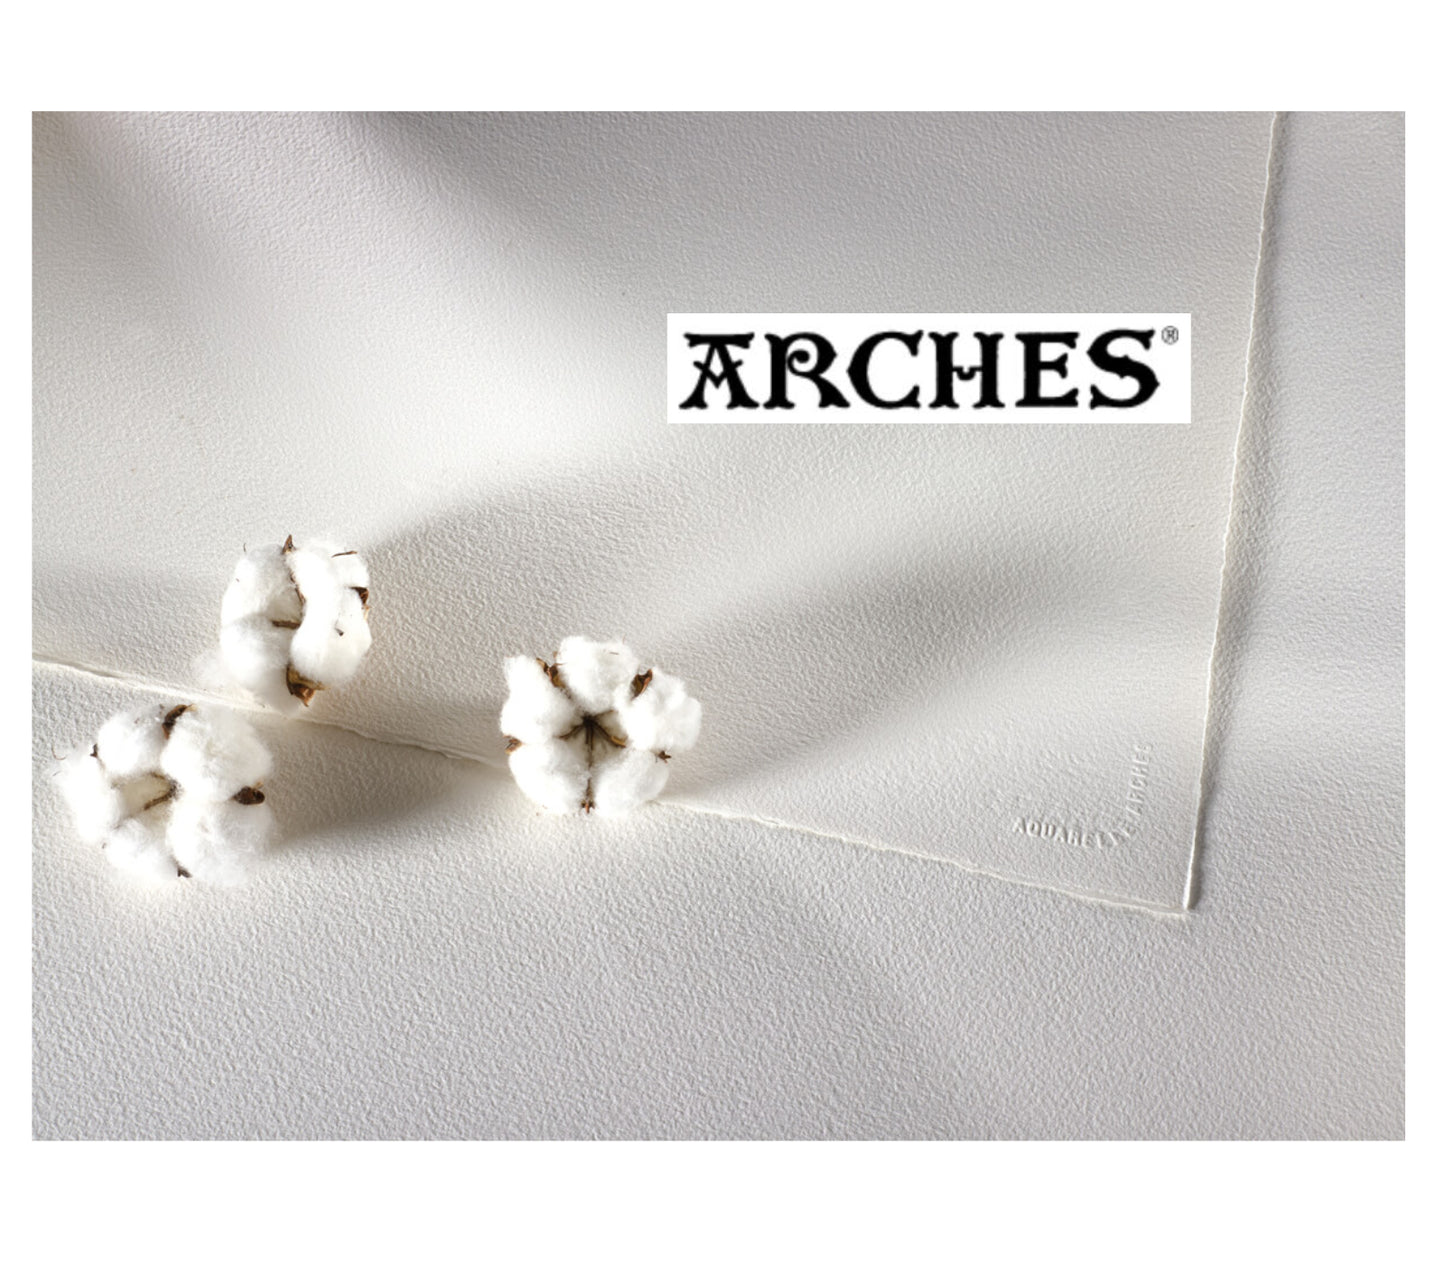 Arches® bloc de papel acuarela 20 hojas 18x26 300g blanco